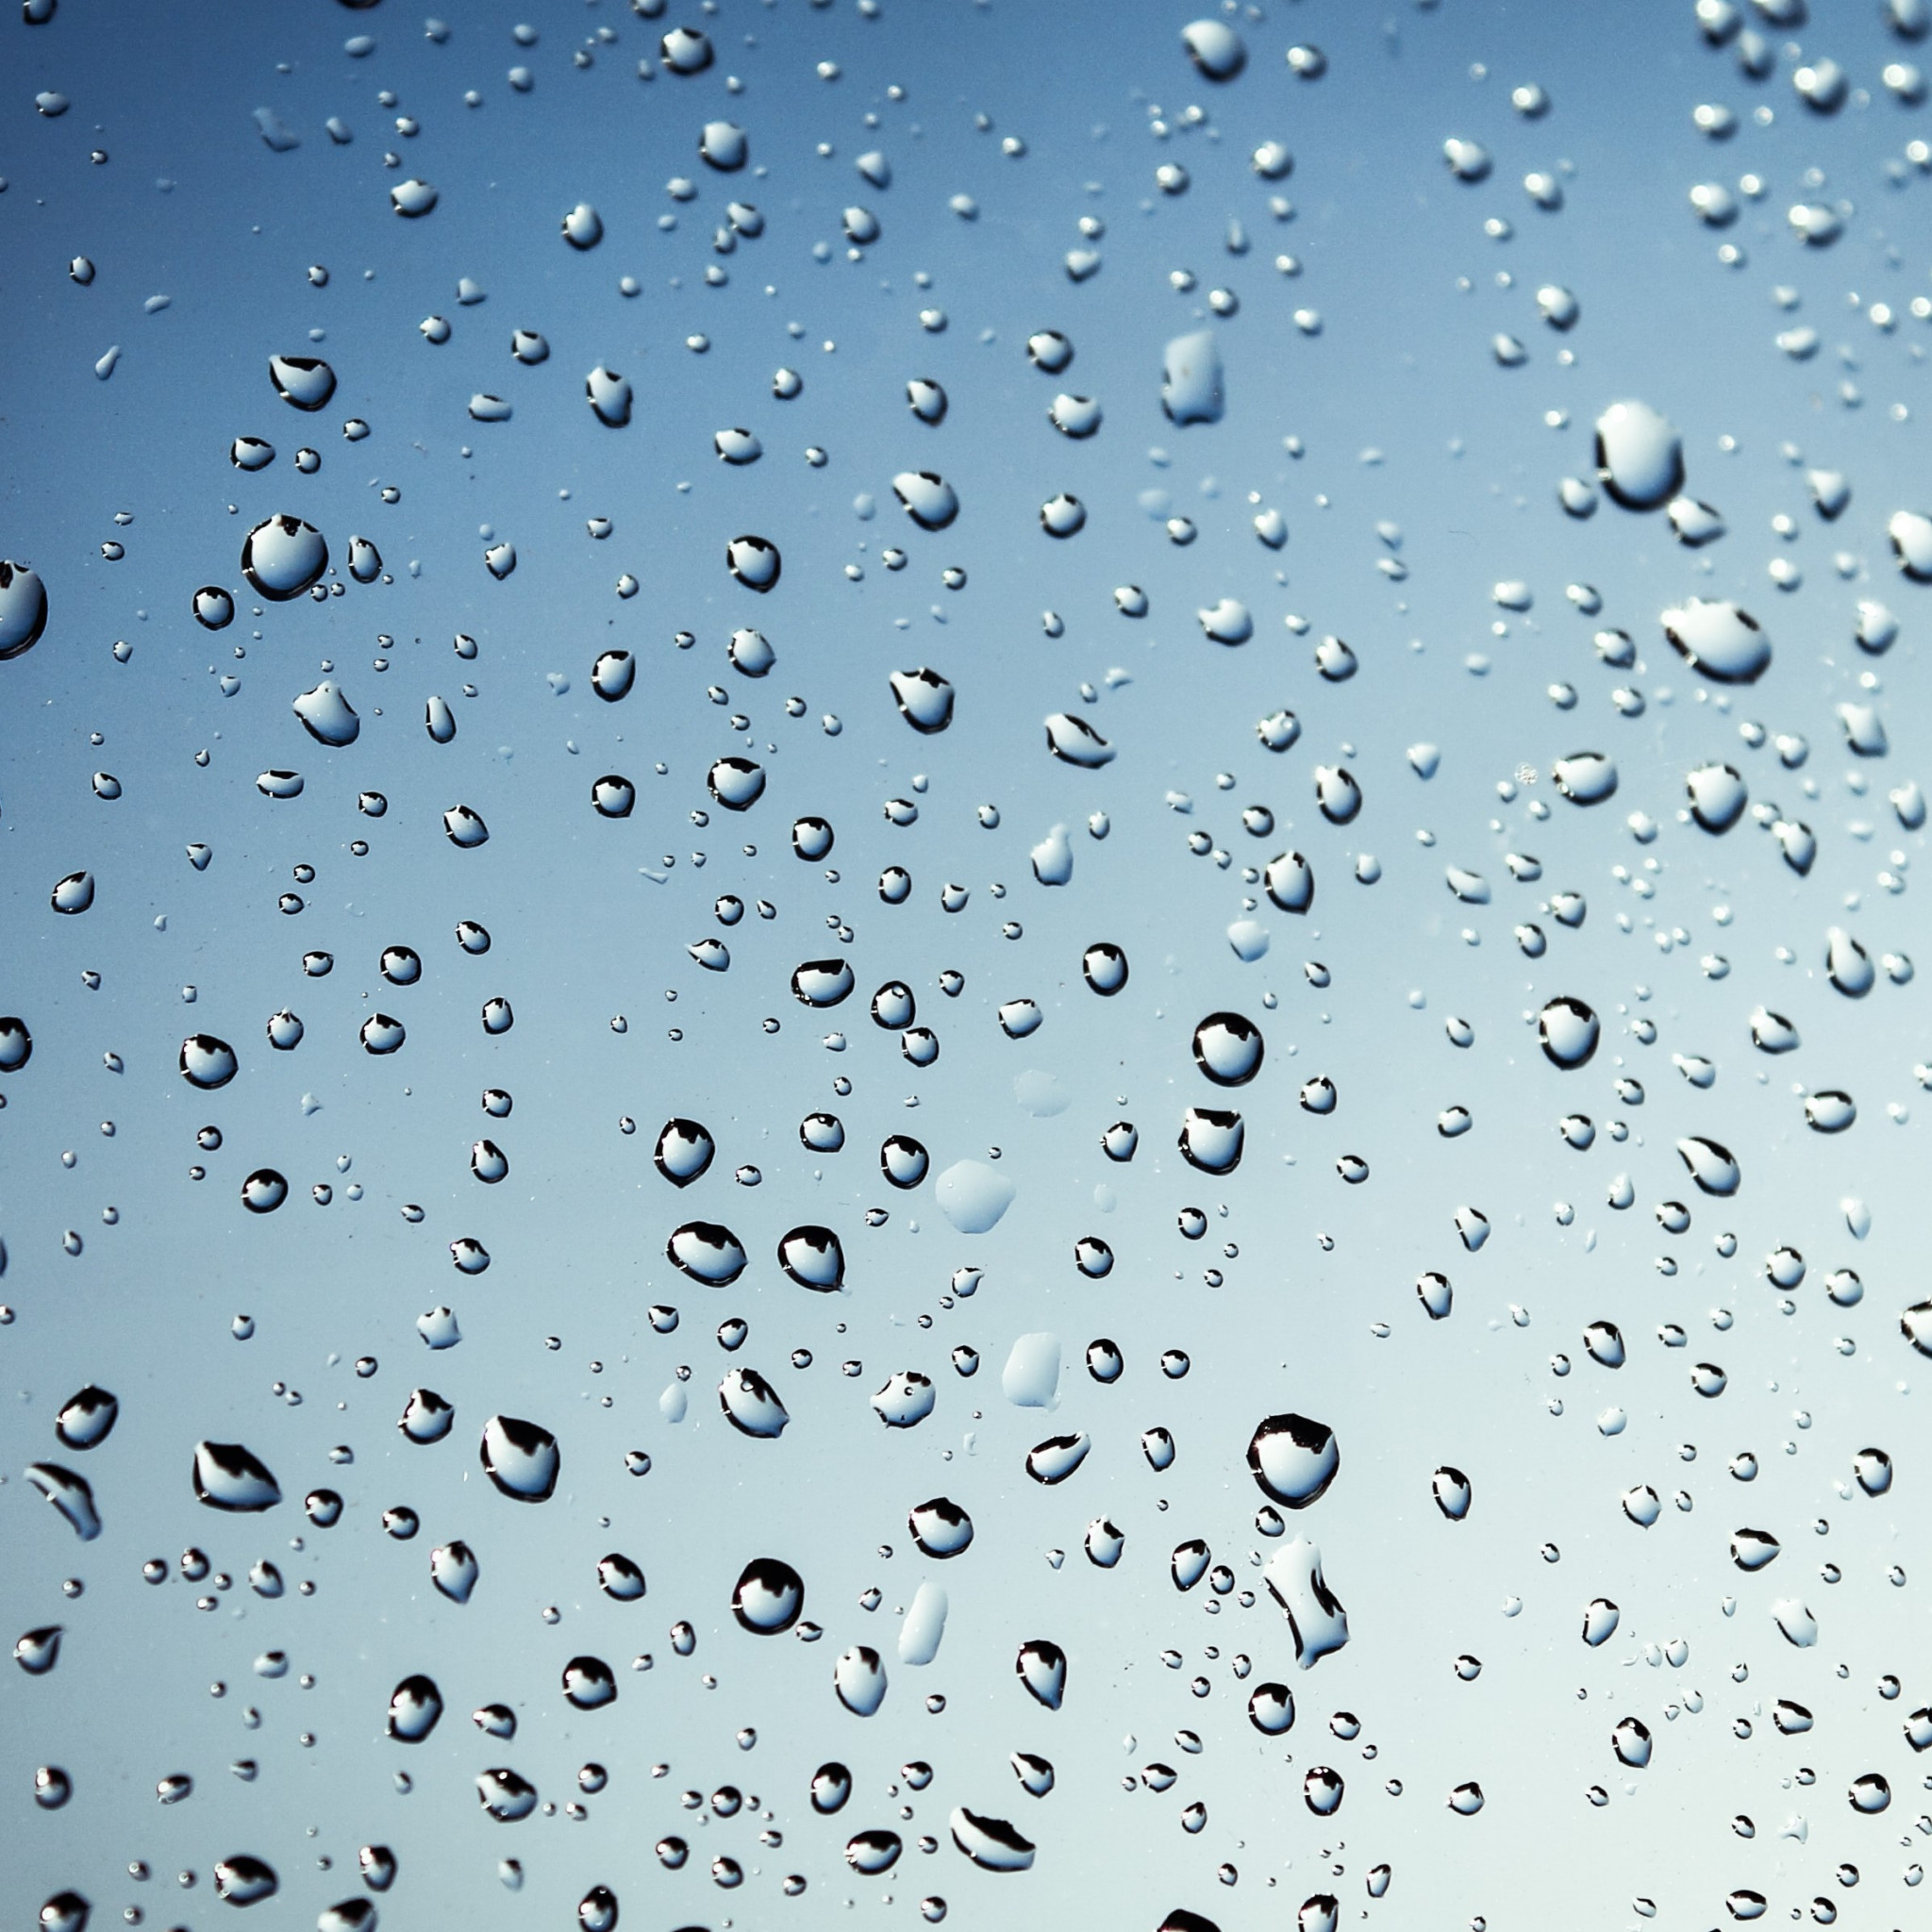 Rain drops on window wallpaper 2048x2048